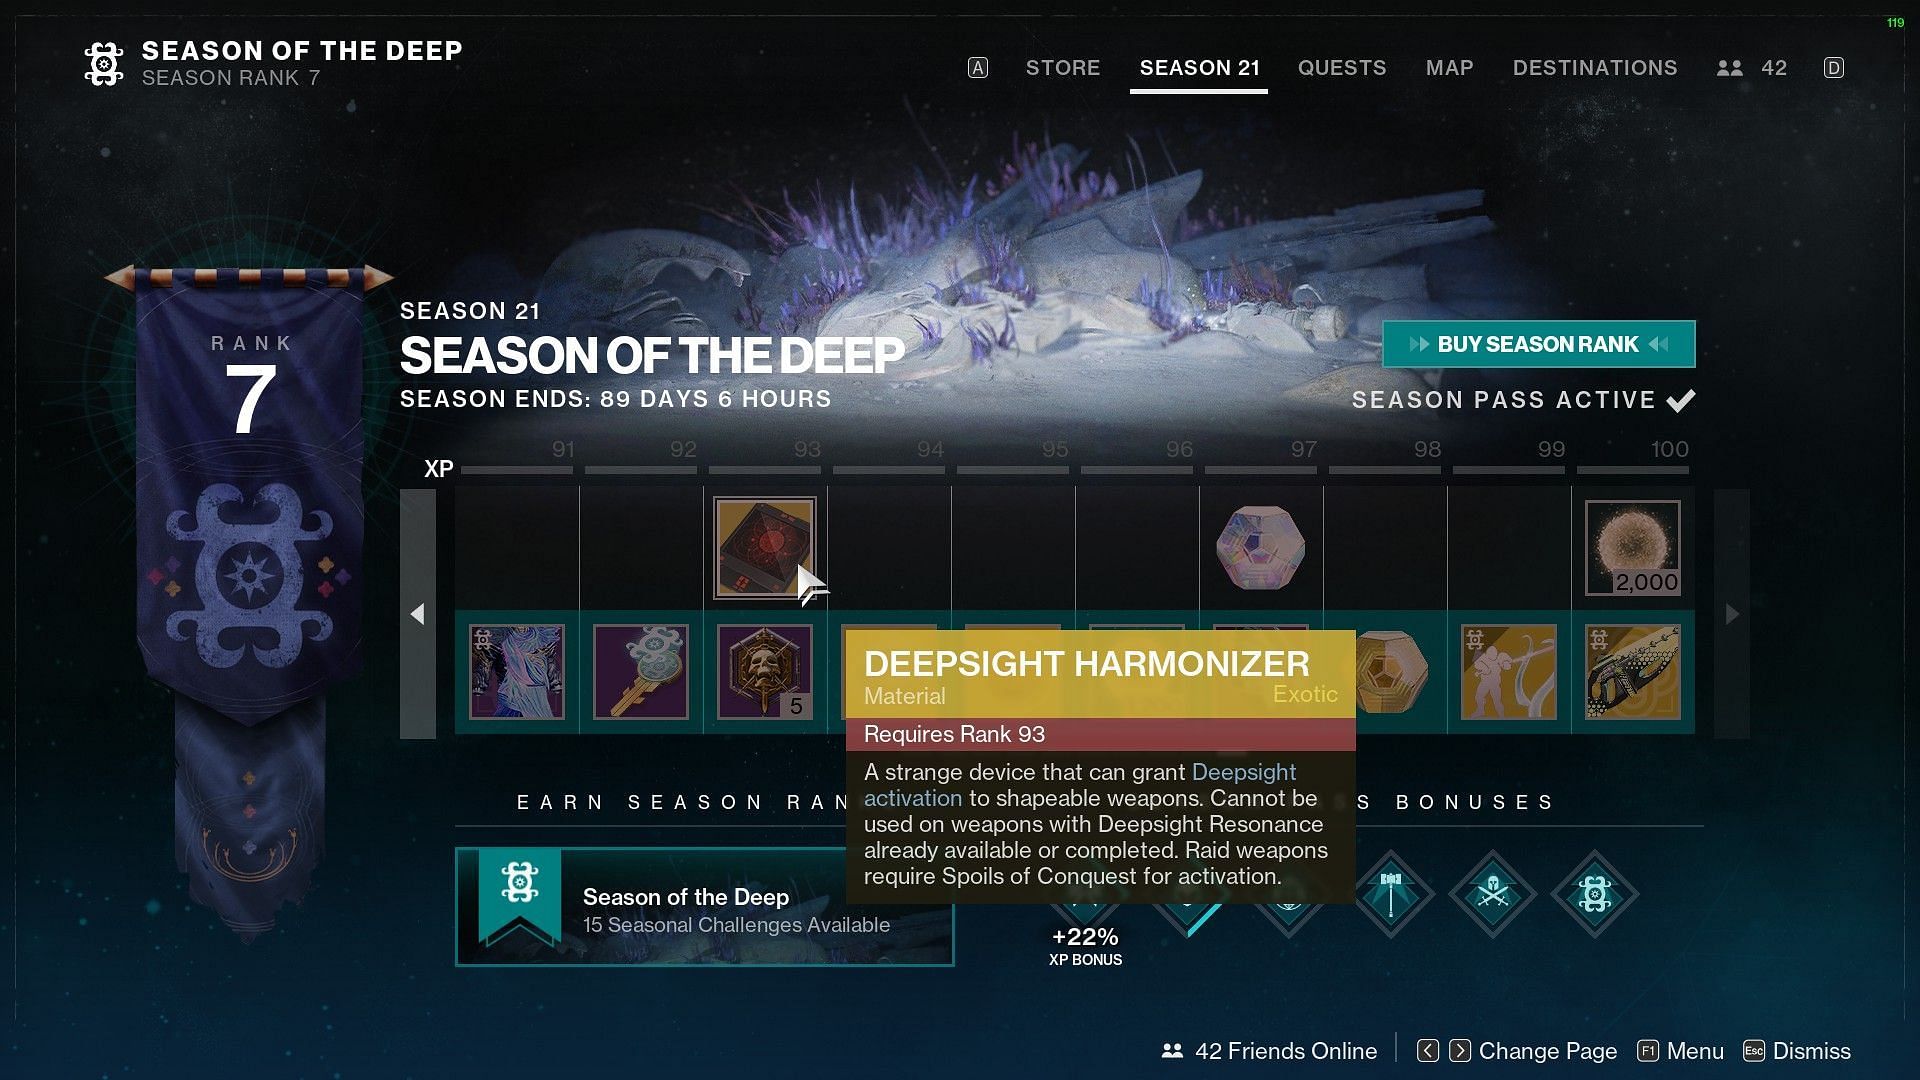 Deepsight Harmonizer in the free tier (Image via Destiny 2)